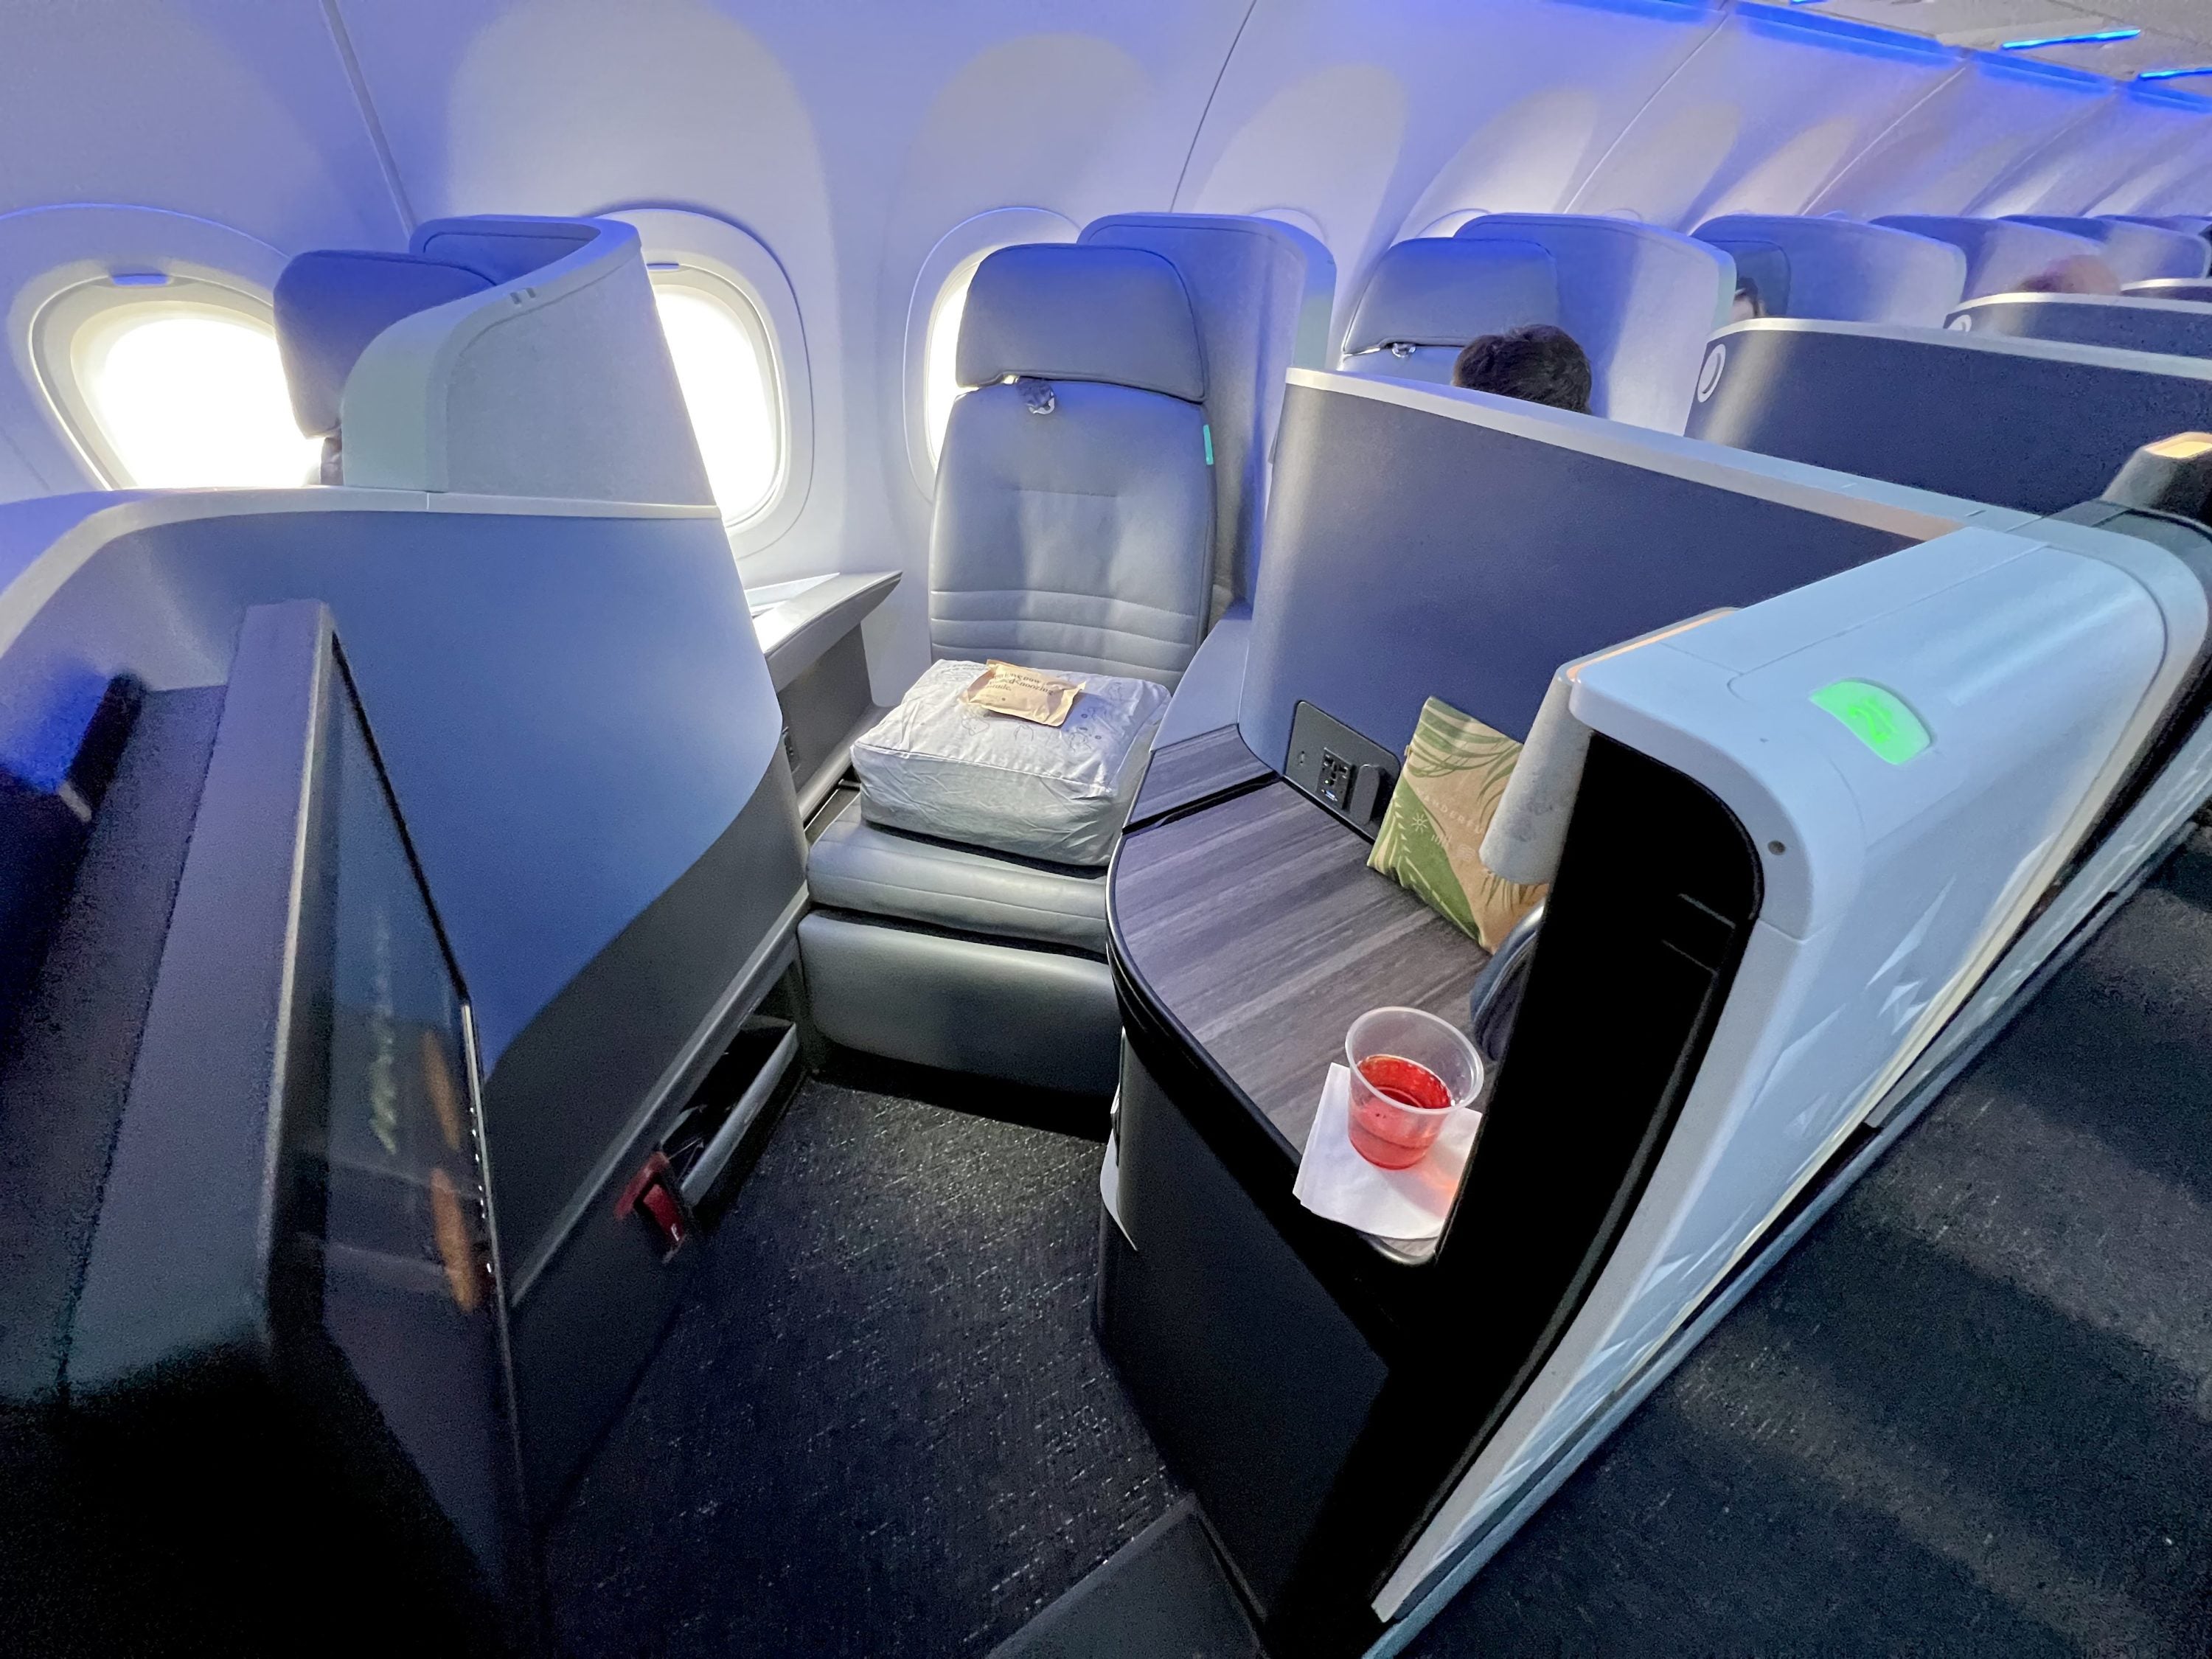 JetBlue Mint A321LR seat 2F wide angle